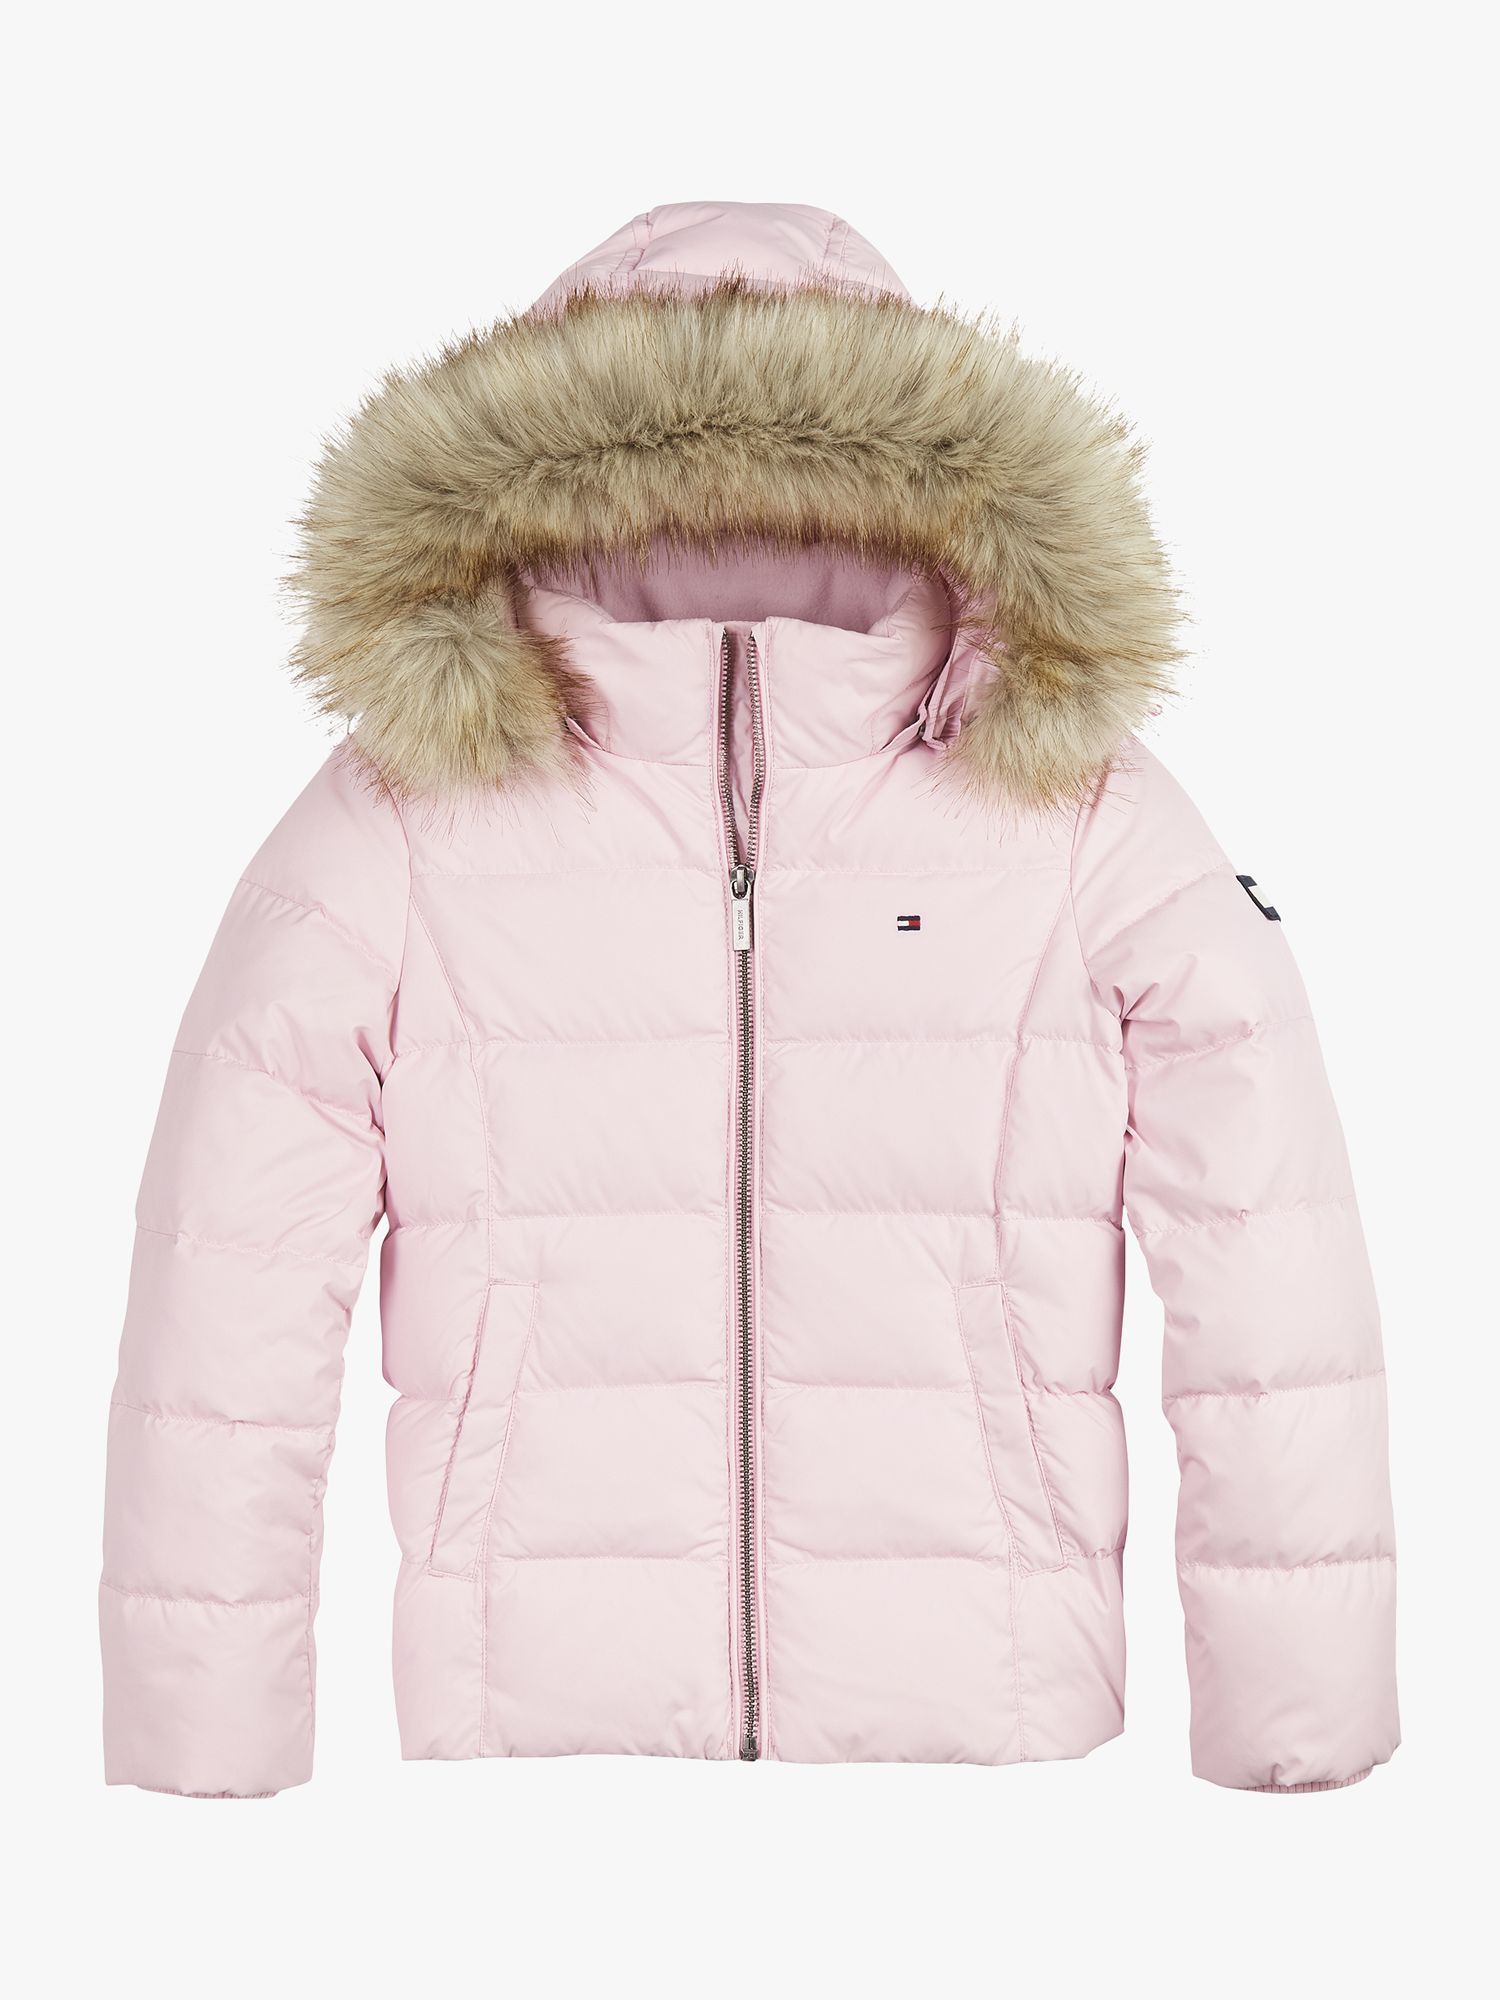 Tommy Hilfiger Girls' Essential Jacket 